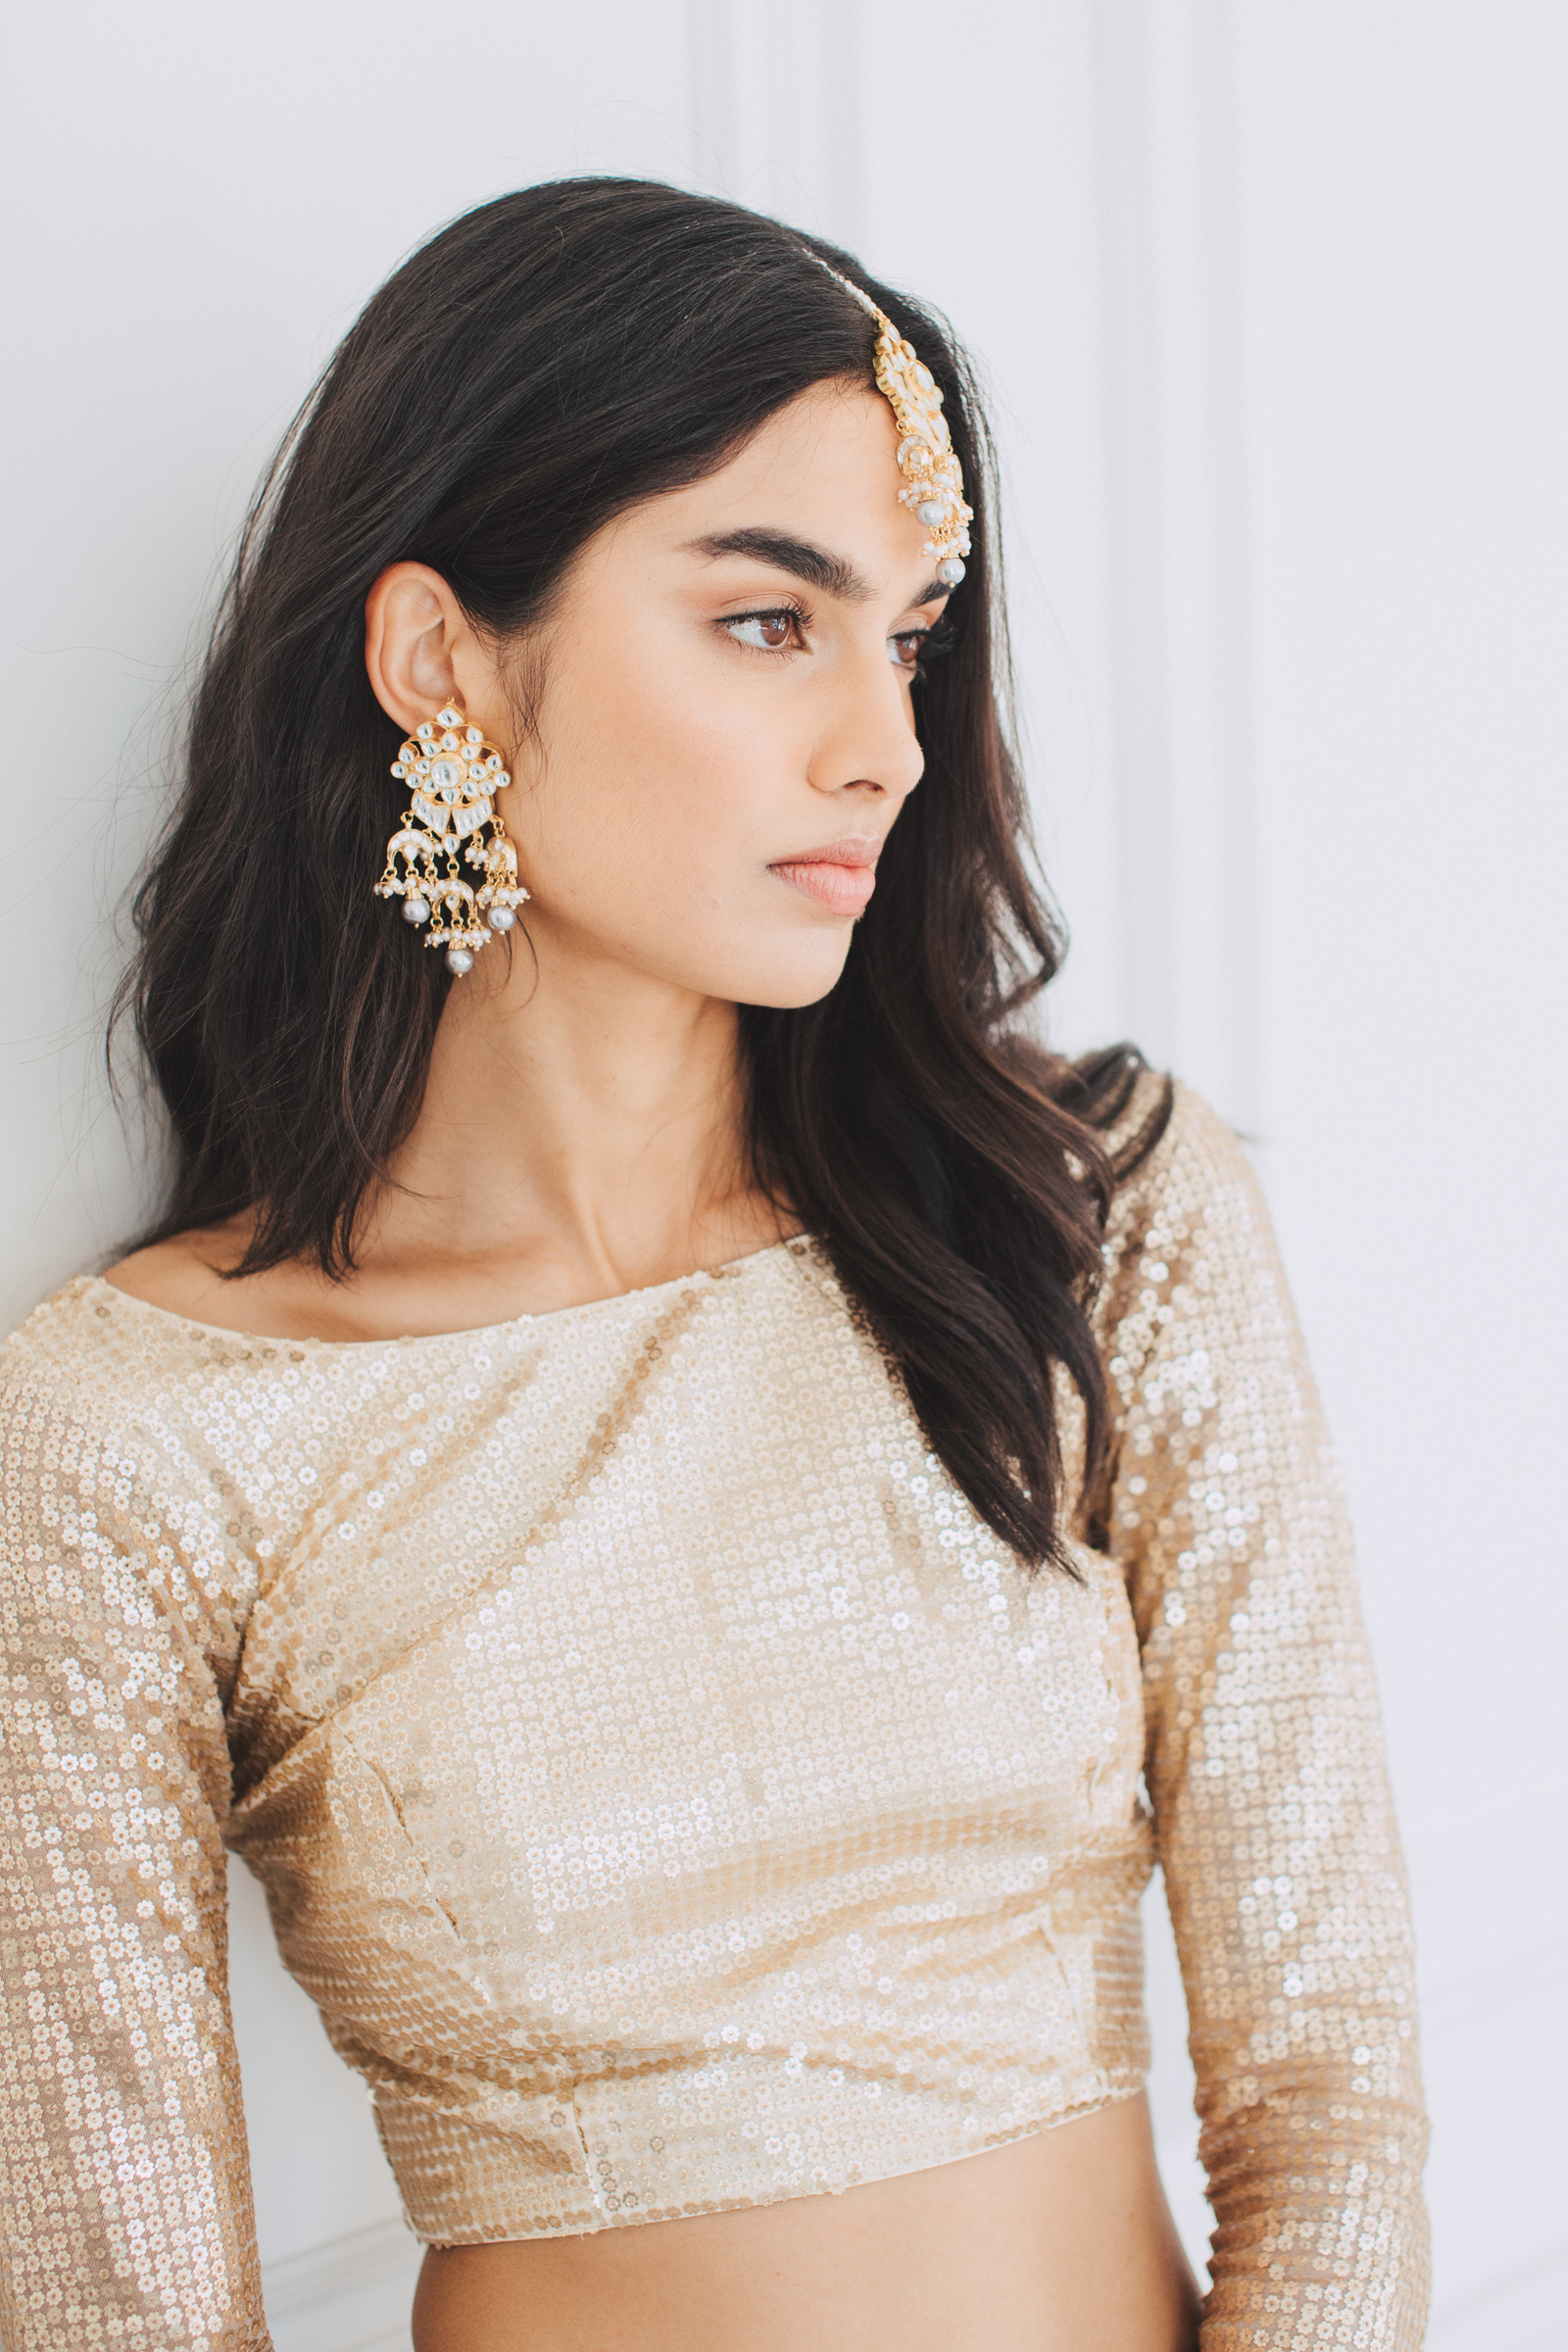 South Asian Fashion